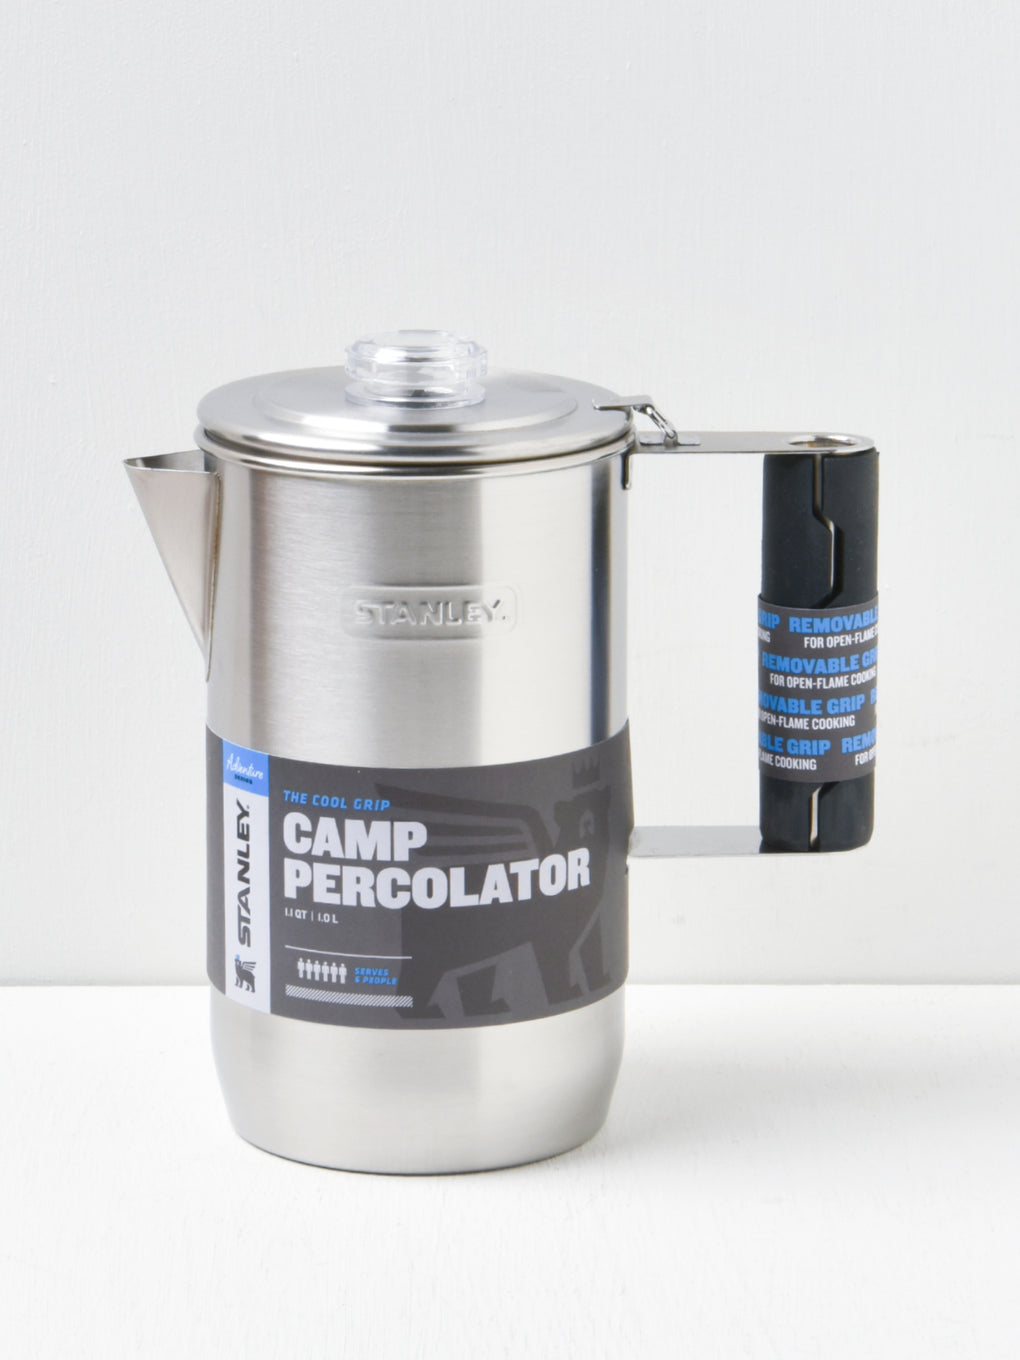 The Cool-Grip Camp Percolator 1.1QT / 1.0L – Blancsom